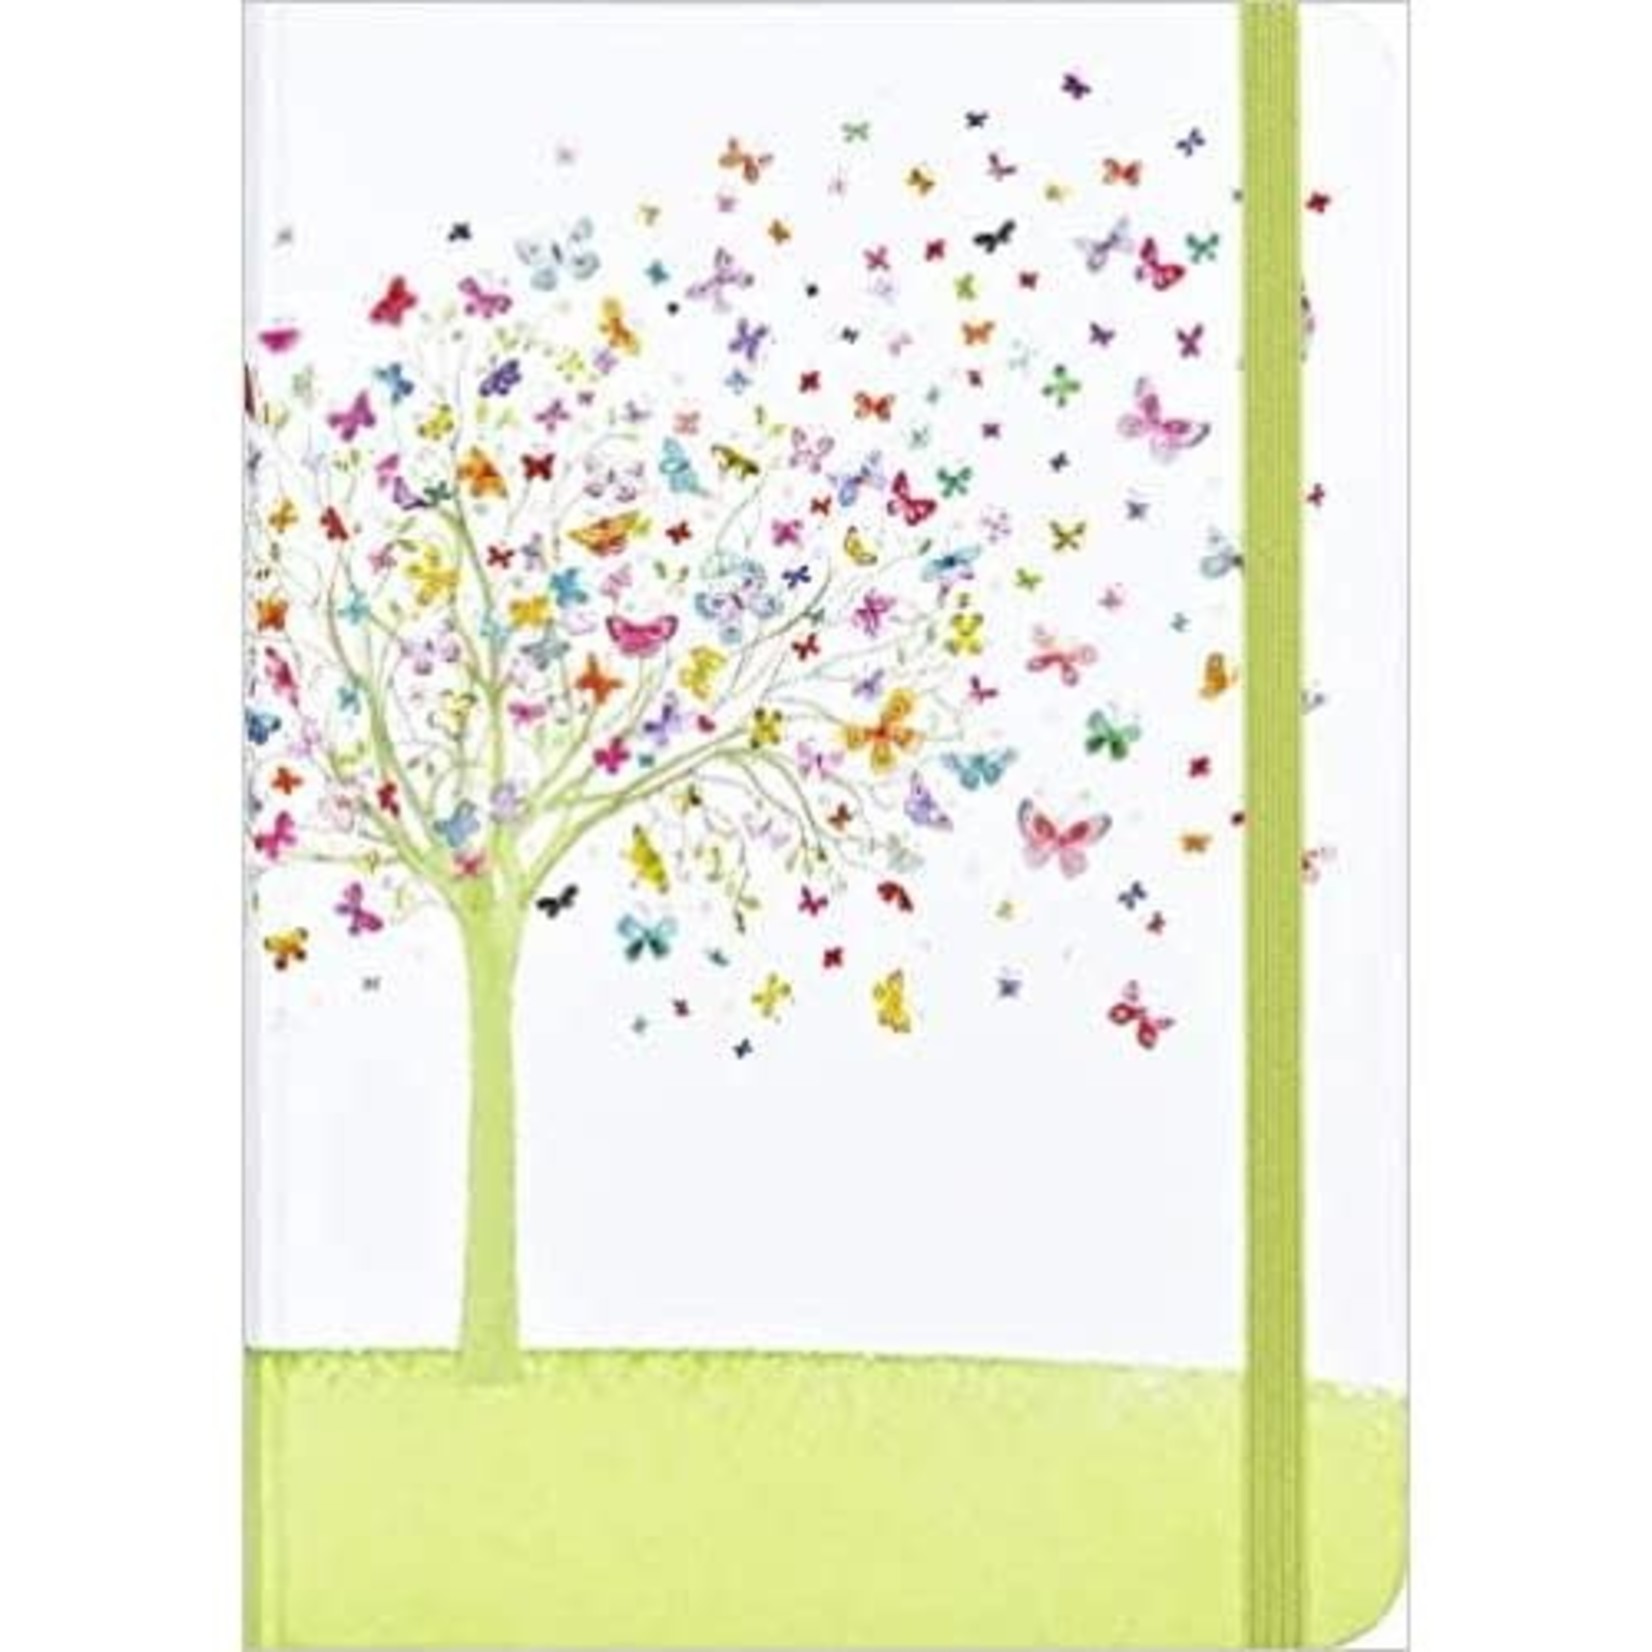 Tree of Butterflies Journal / Diary / Notebook